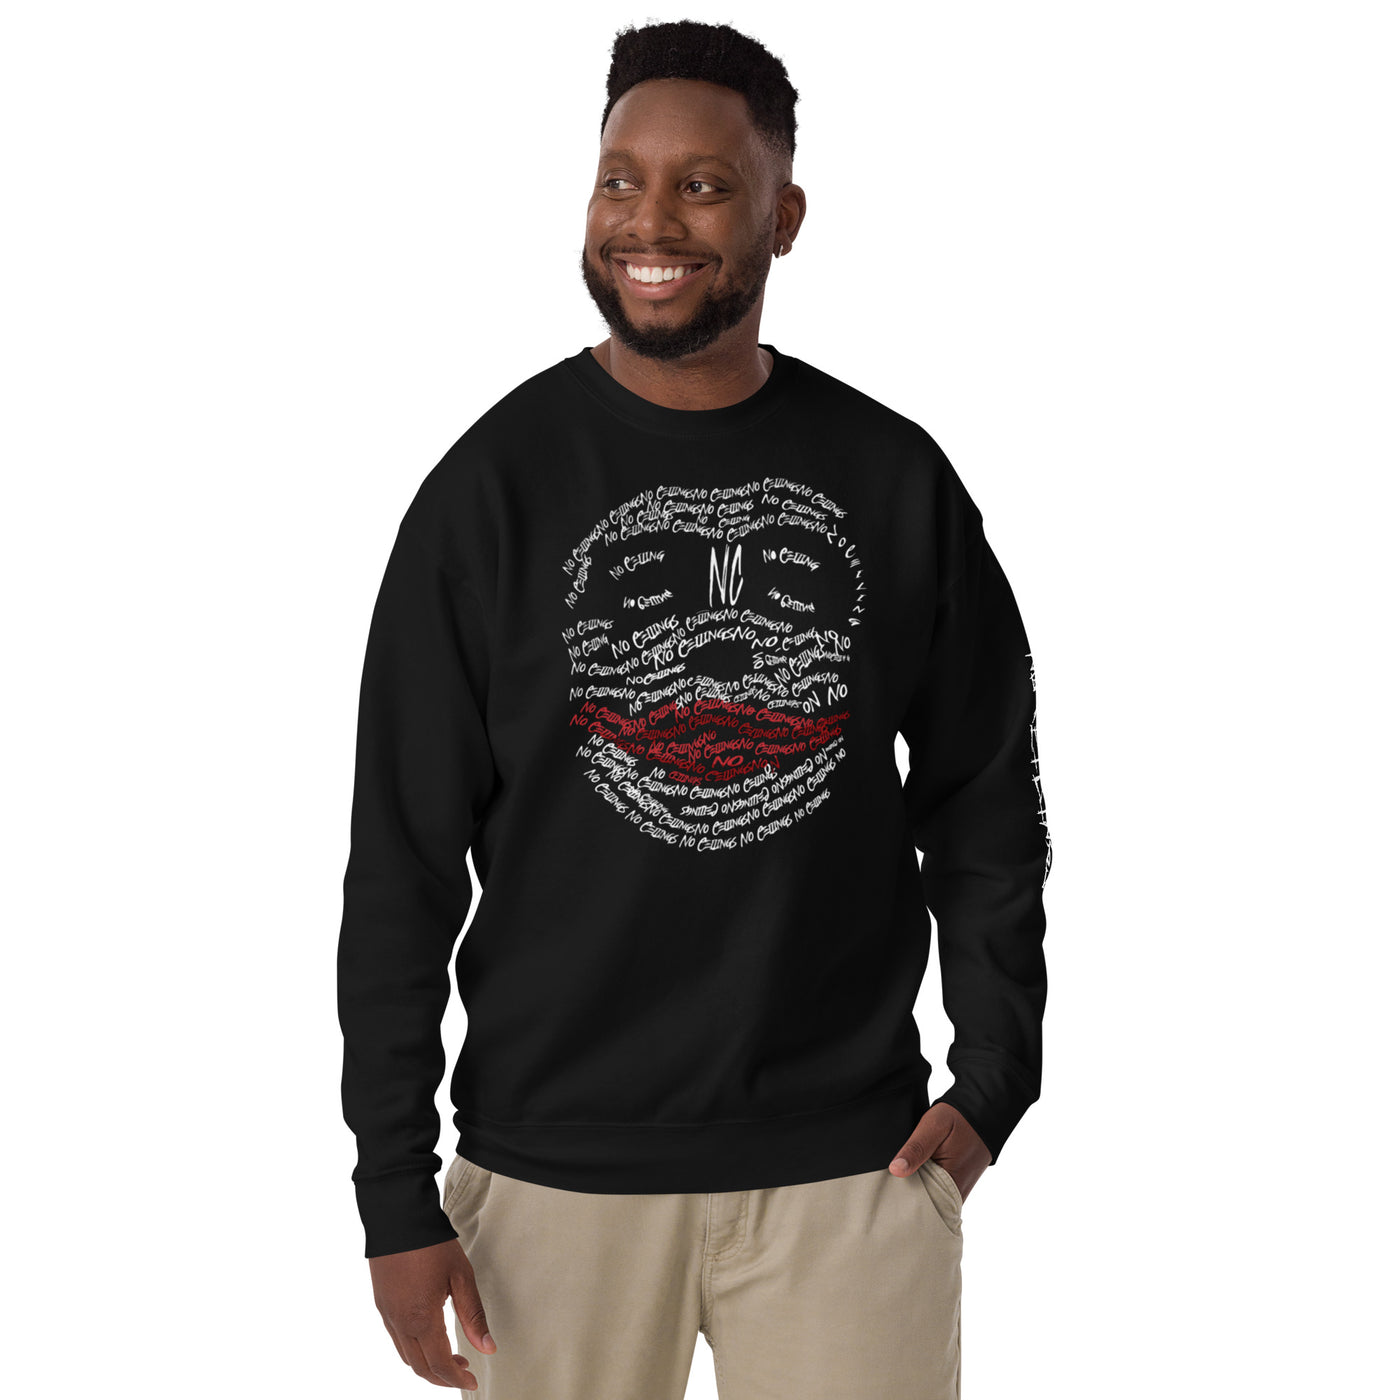 Joker Sweater Unisex Premium Sweatshirt